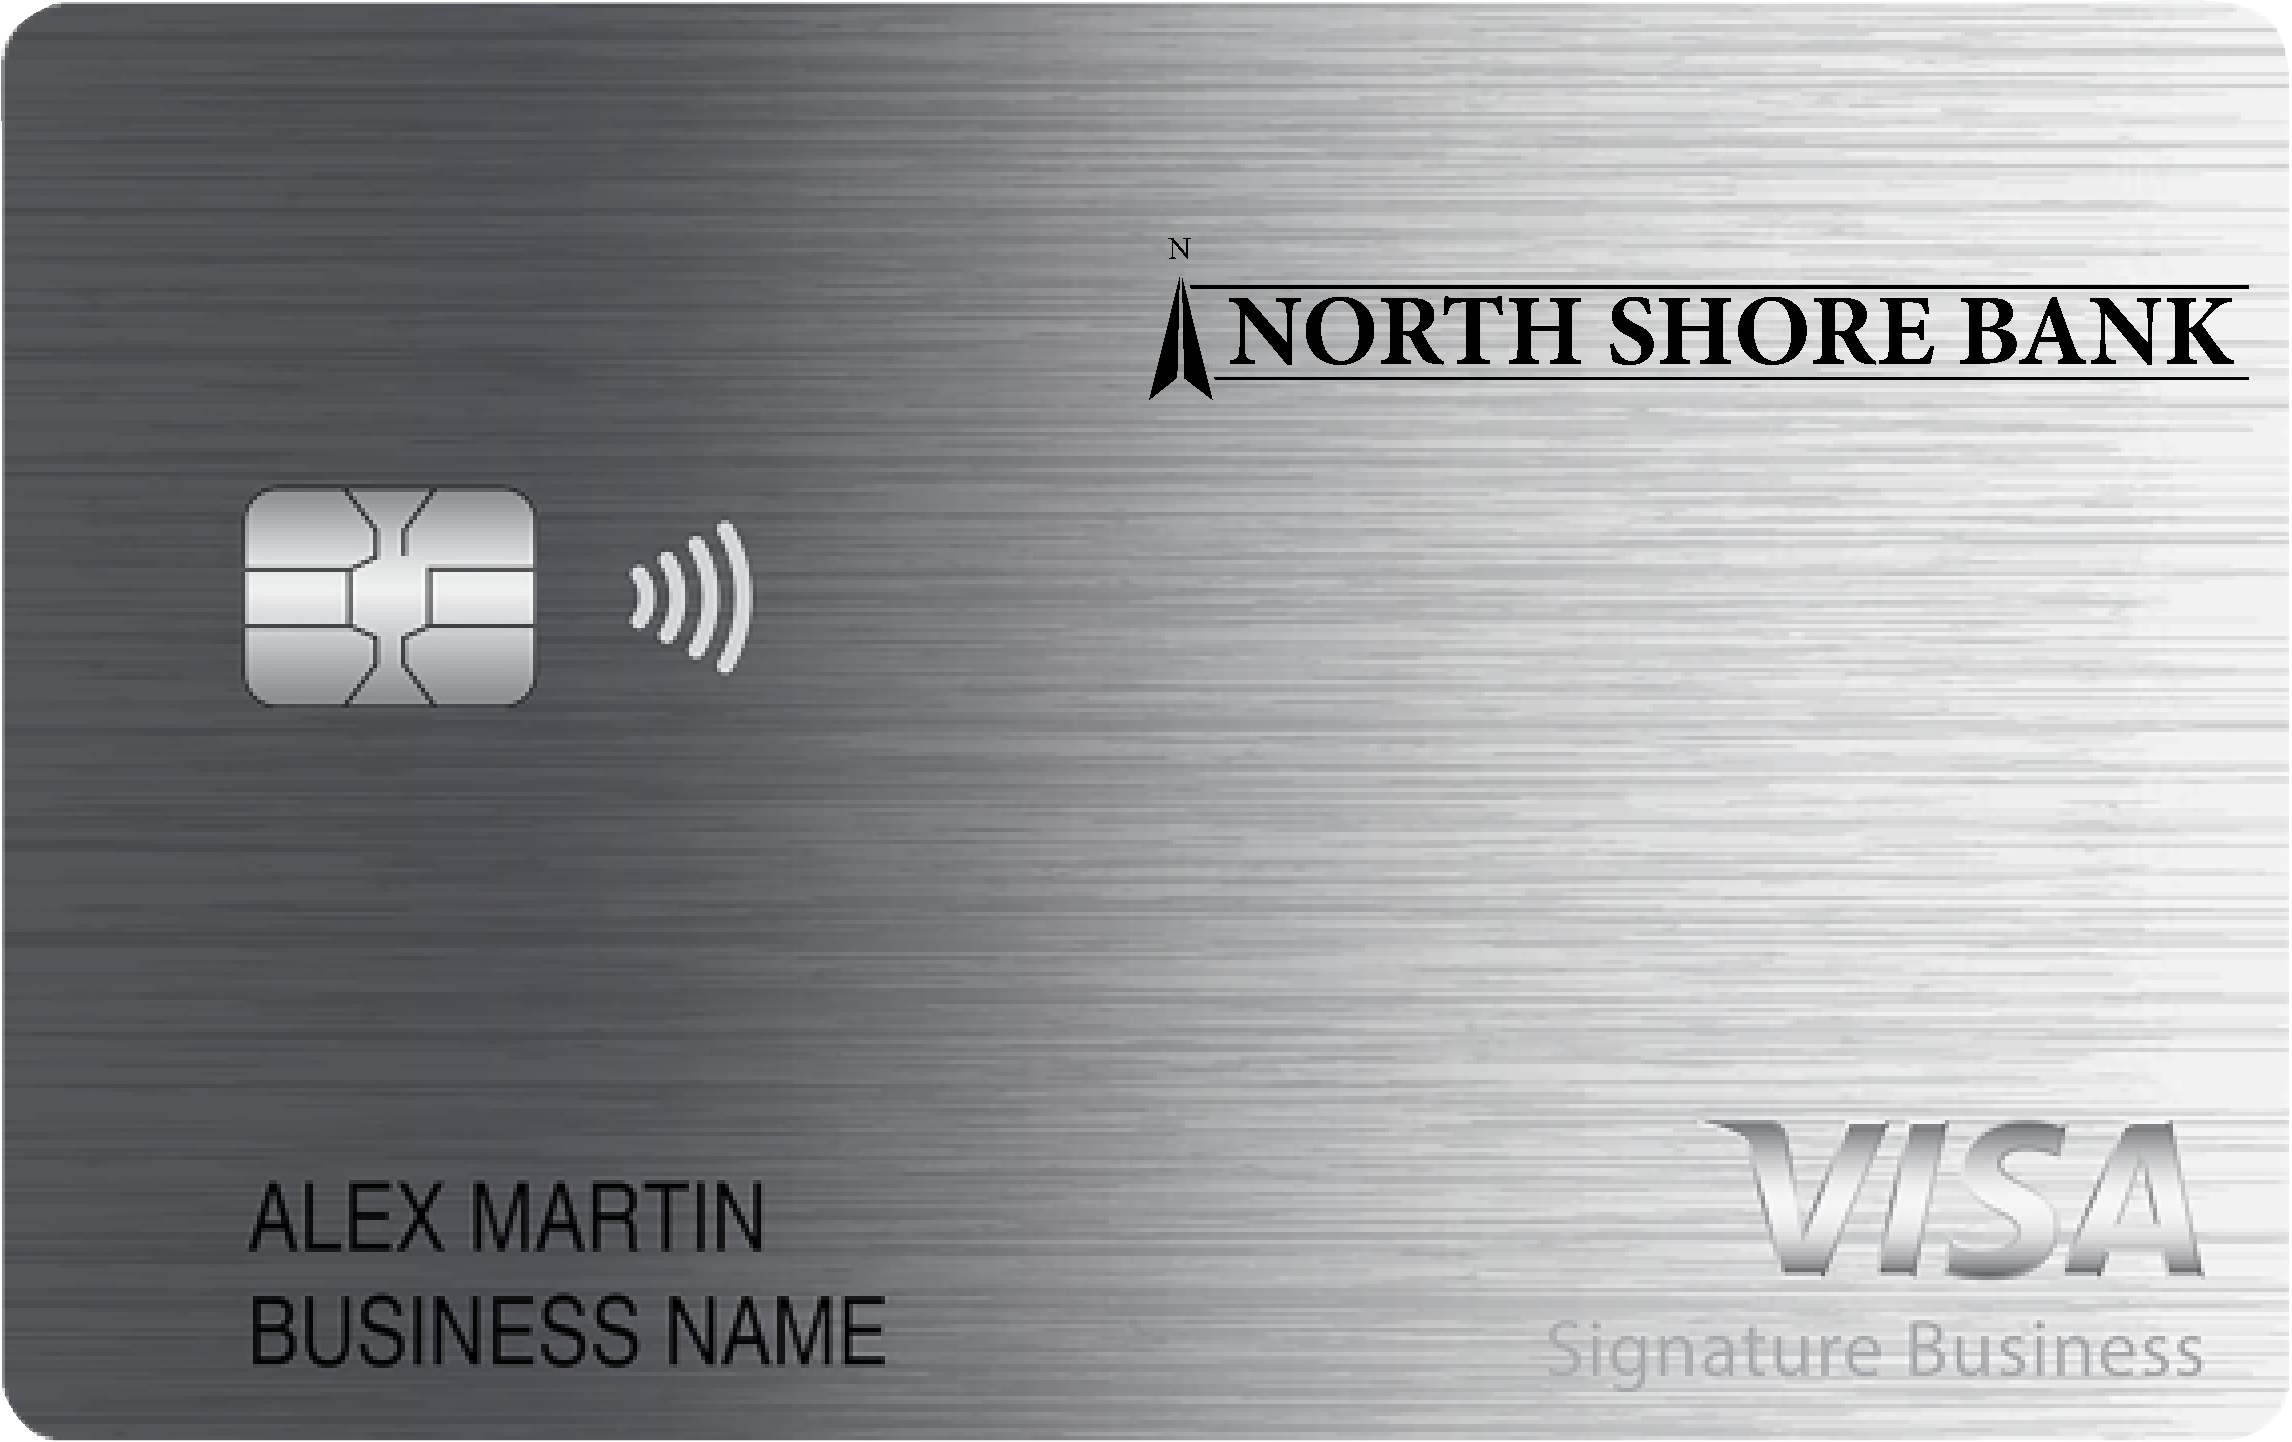 North Shore Bank Smart Business Rewards Card